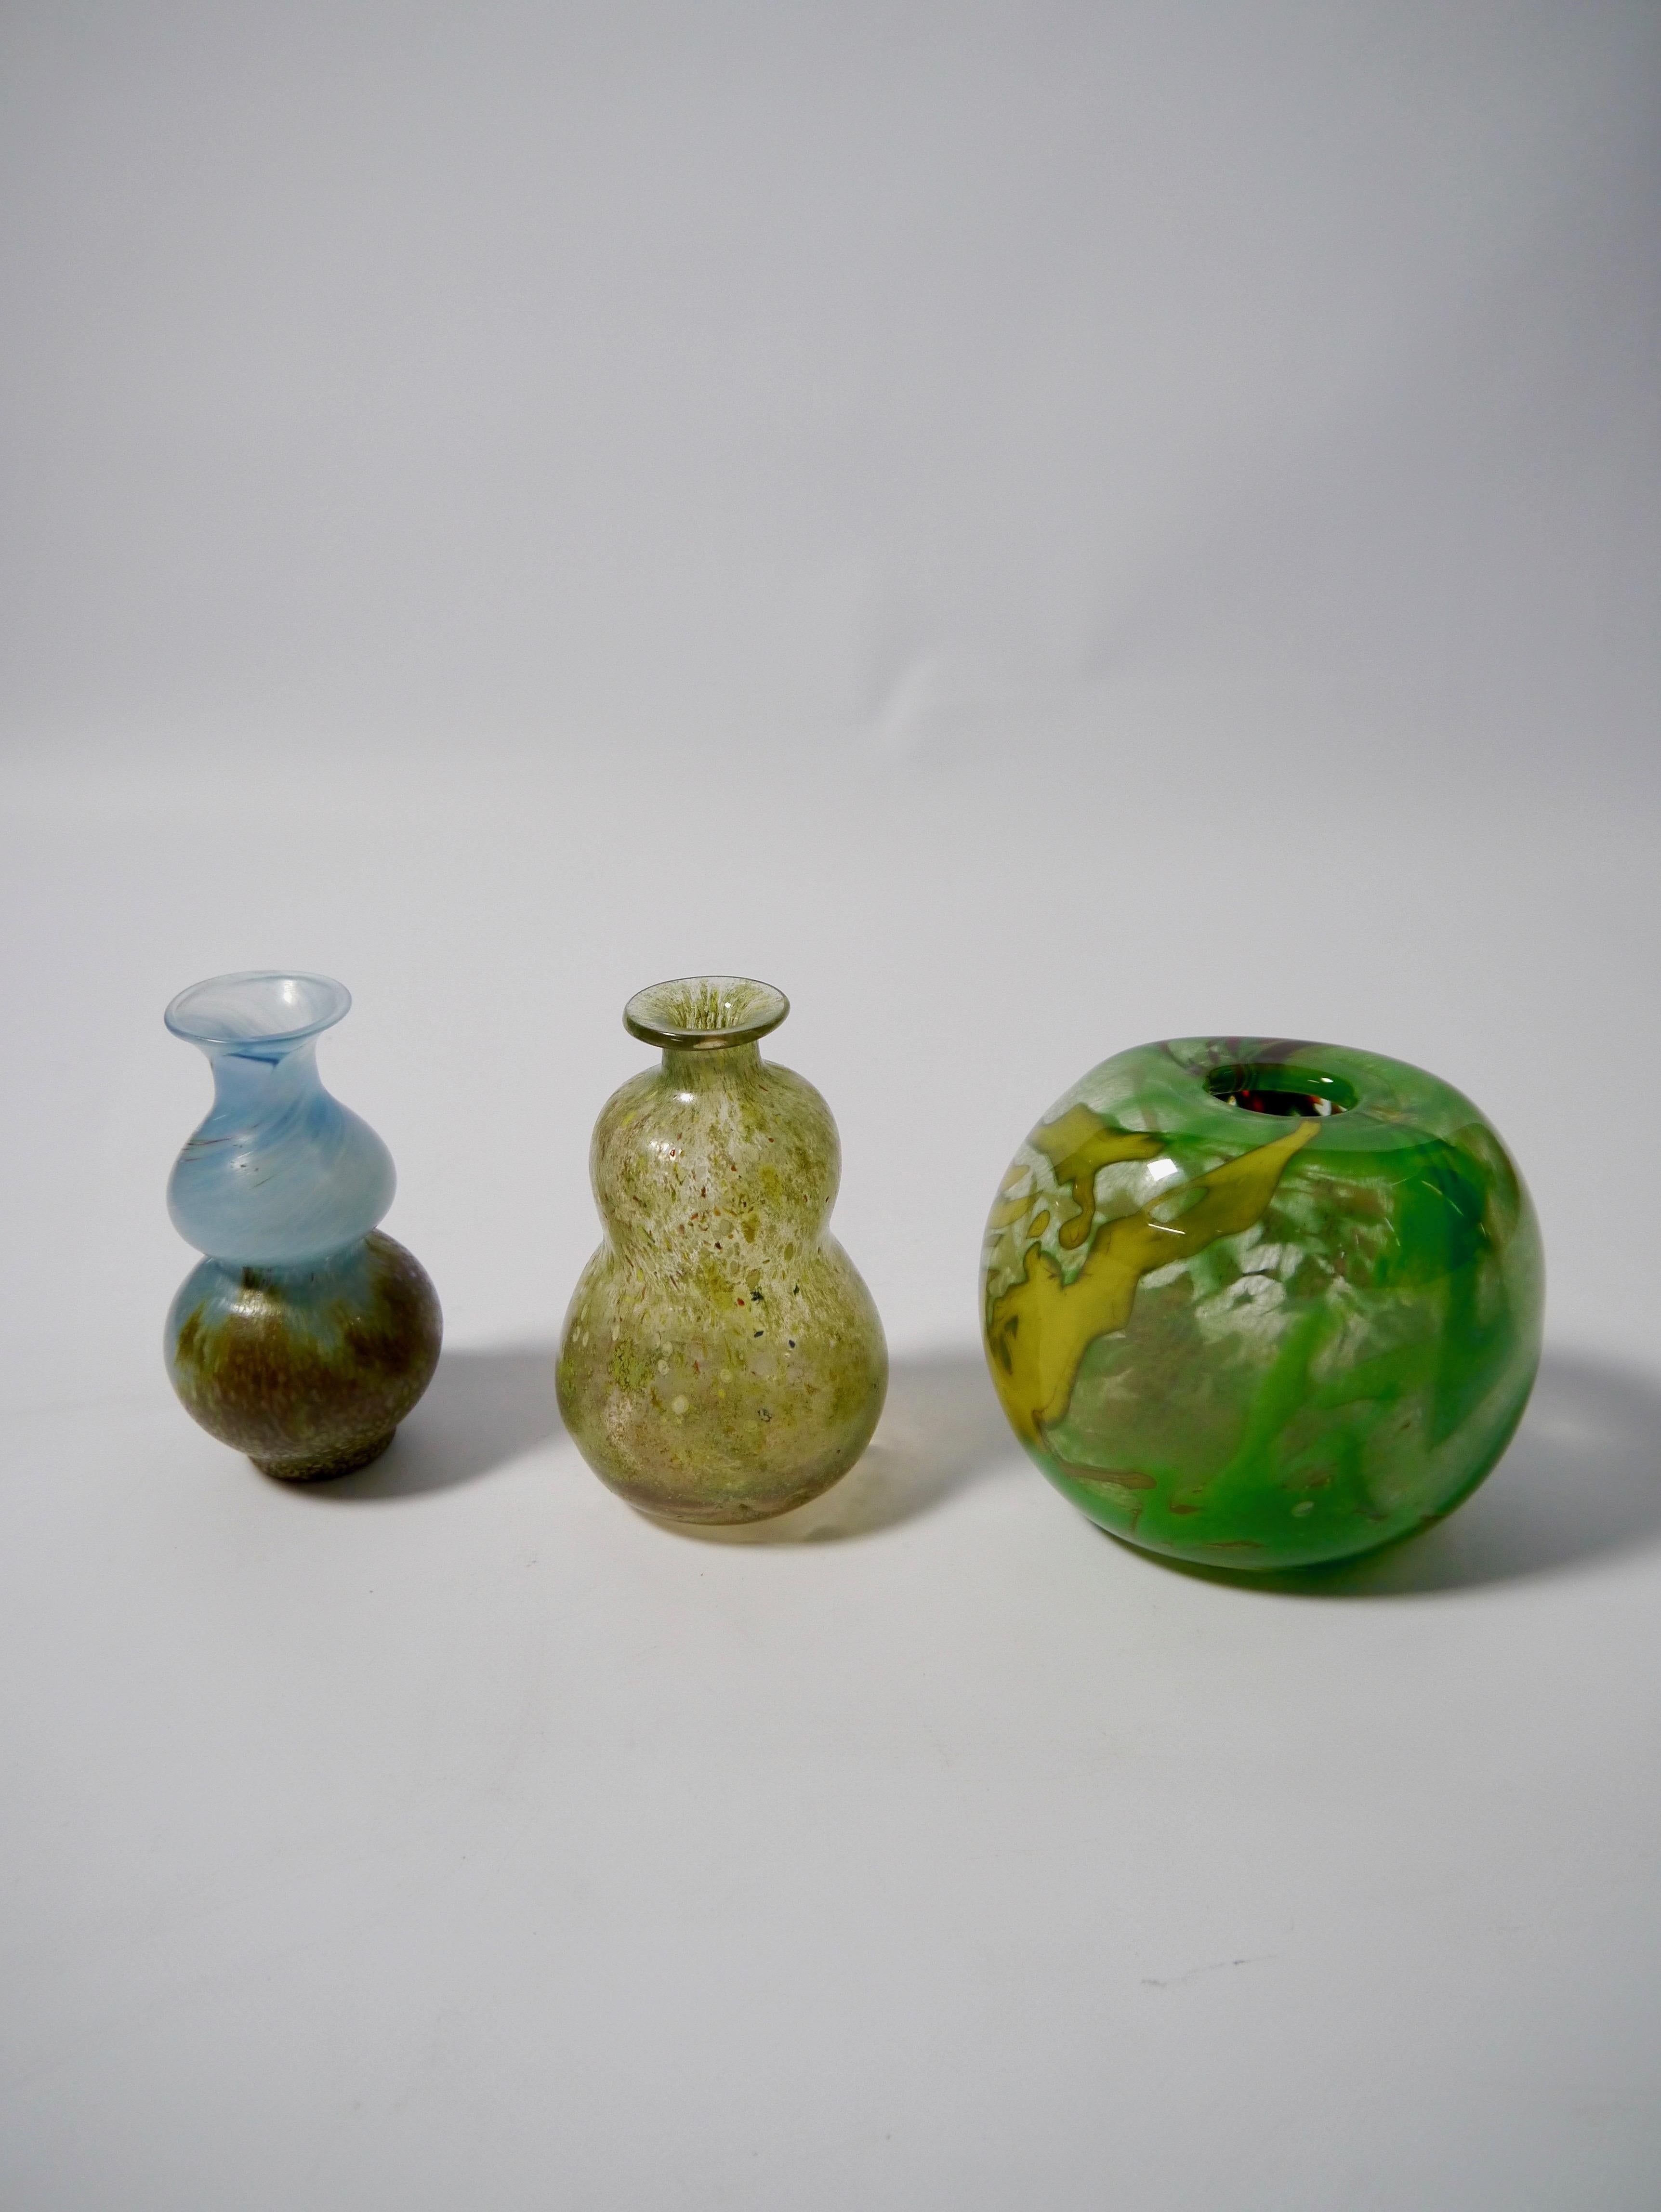 Set or three distinct Murano style art glass vases designed by Gro Bergslien (1940-1991), and fabricated at Hadeland Glassverk (established 1792). Signed at bottom.